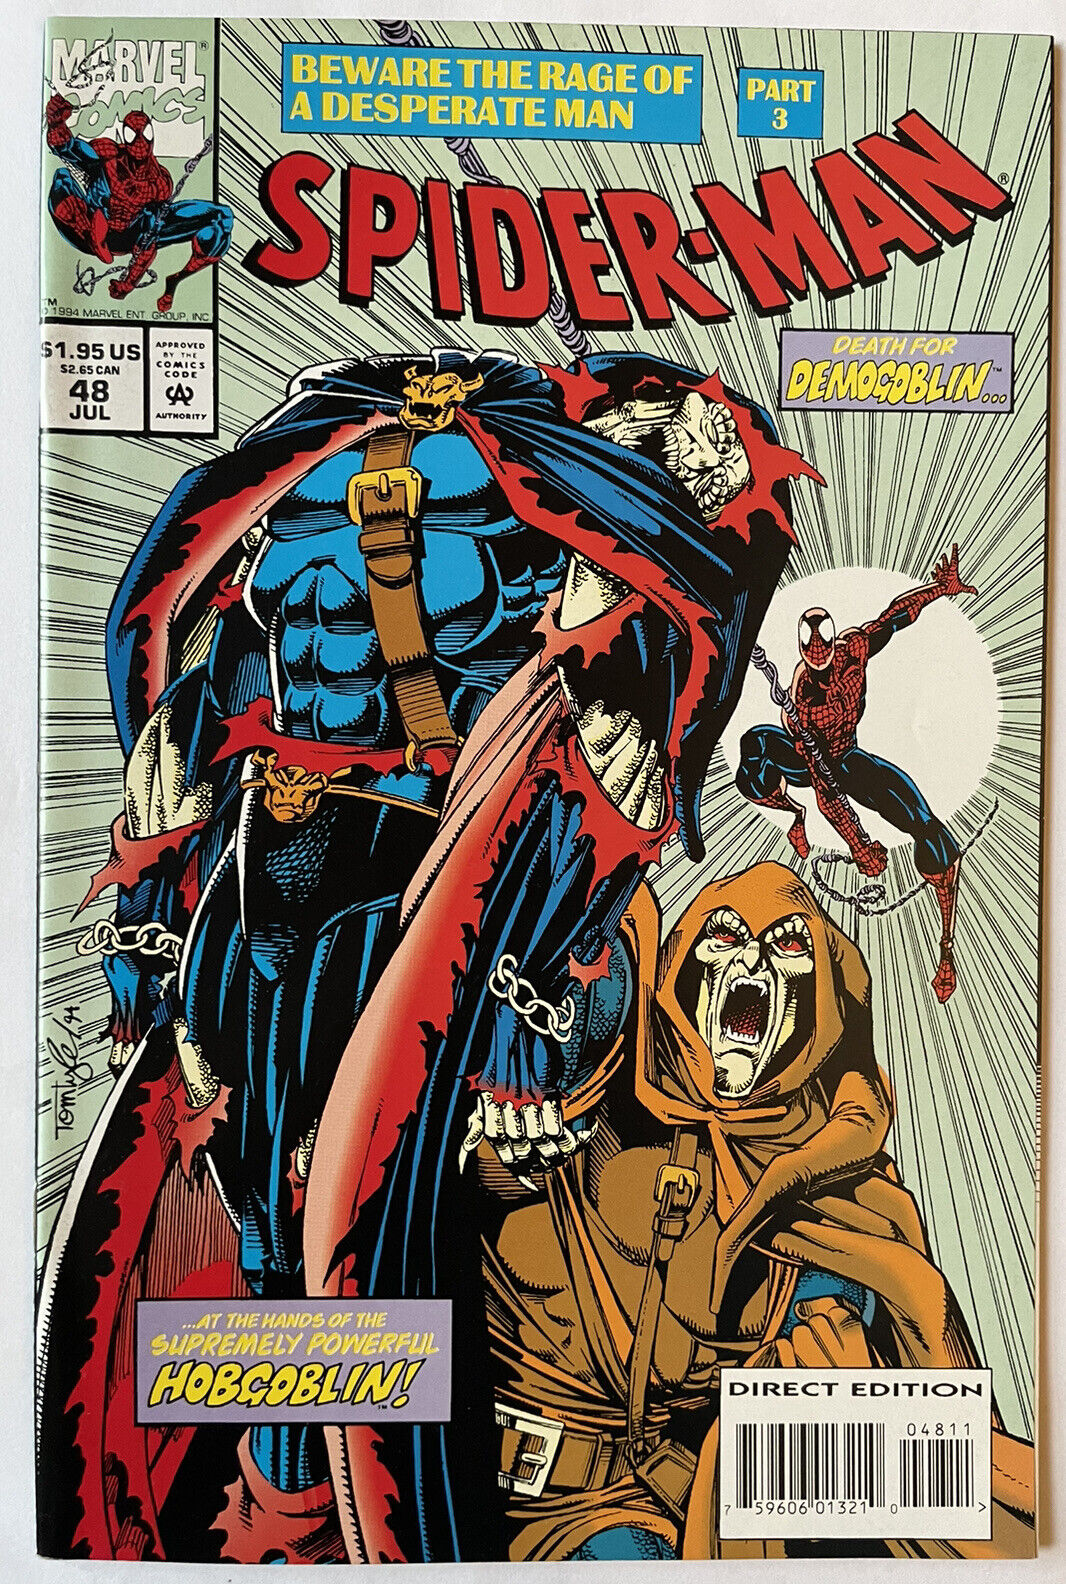 Spider-Man #48 • The Death of Demogoblin Hobgoblin Appears (Marvel 1994)